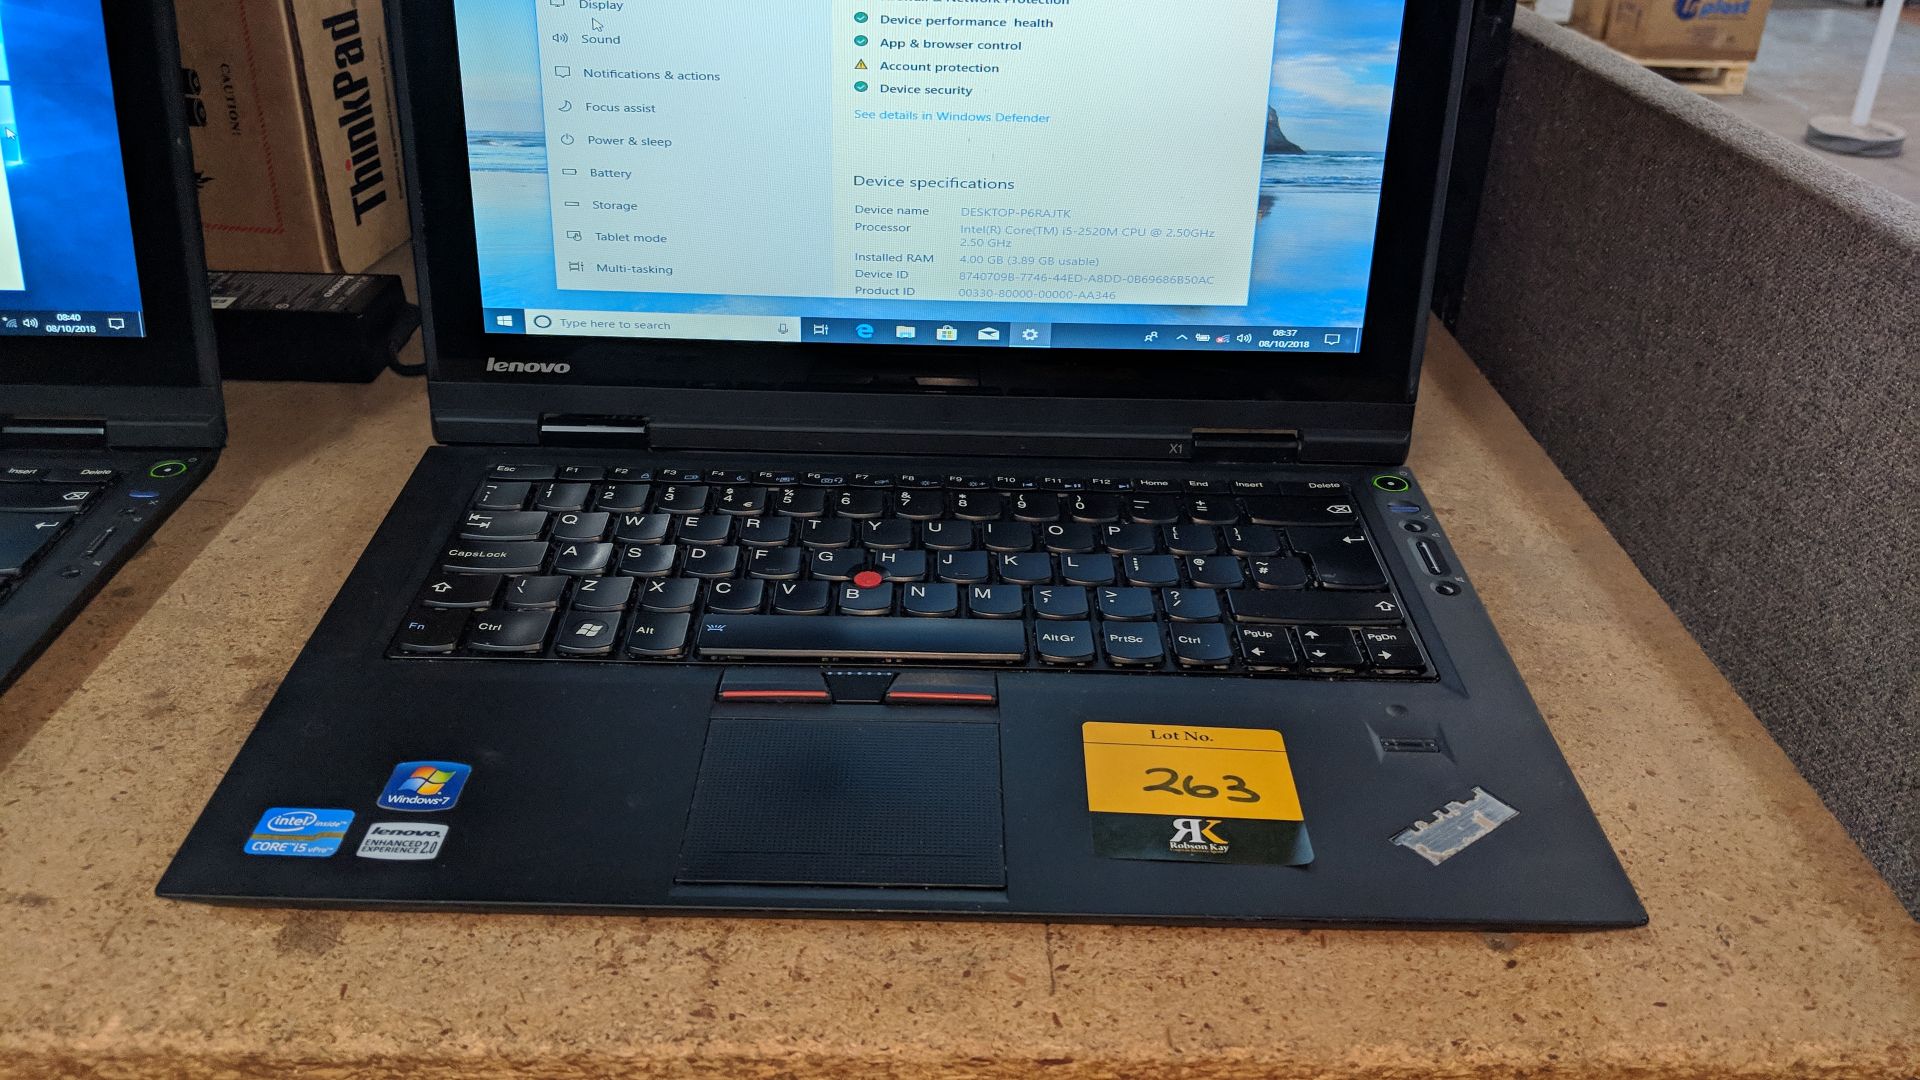 Lenovo ThinkPad notebook computer model 1294AY1. Intel Core i5-2520M CPU@2.5GHz, 4Gb RAM, 320HDD, - Image 4 of 6